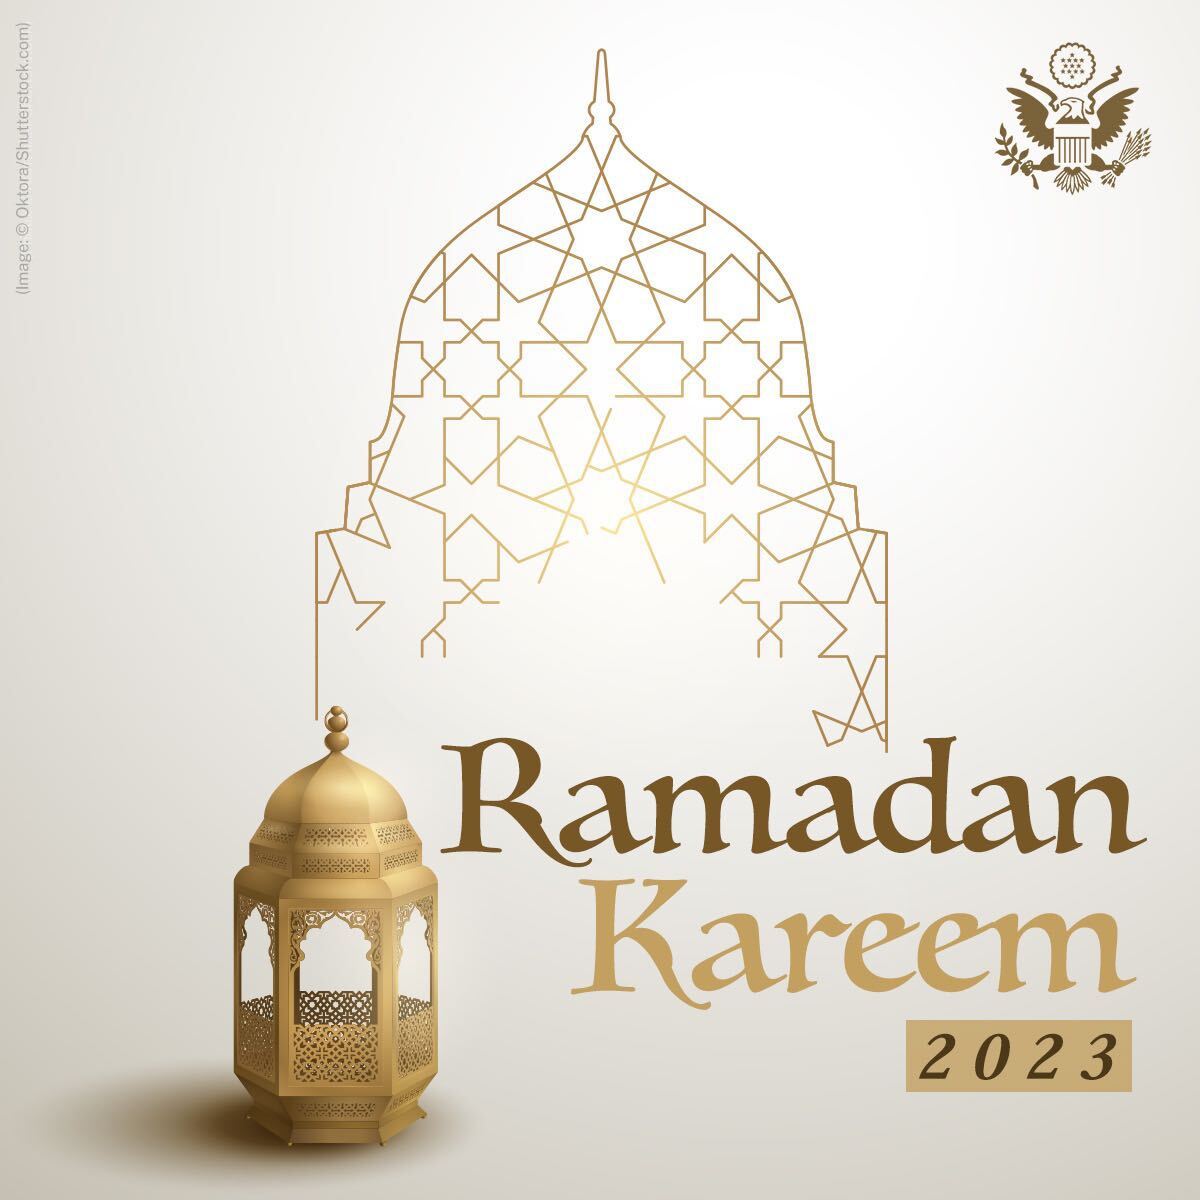 Ultimate Collection of 999+ Astonishing Ramadan Kareem Images – Full 4K Quality